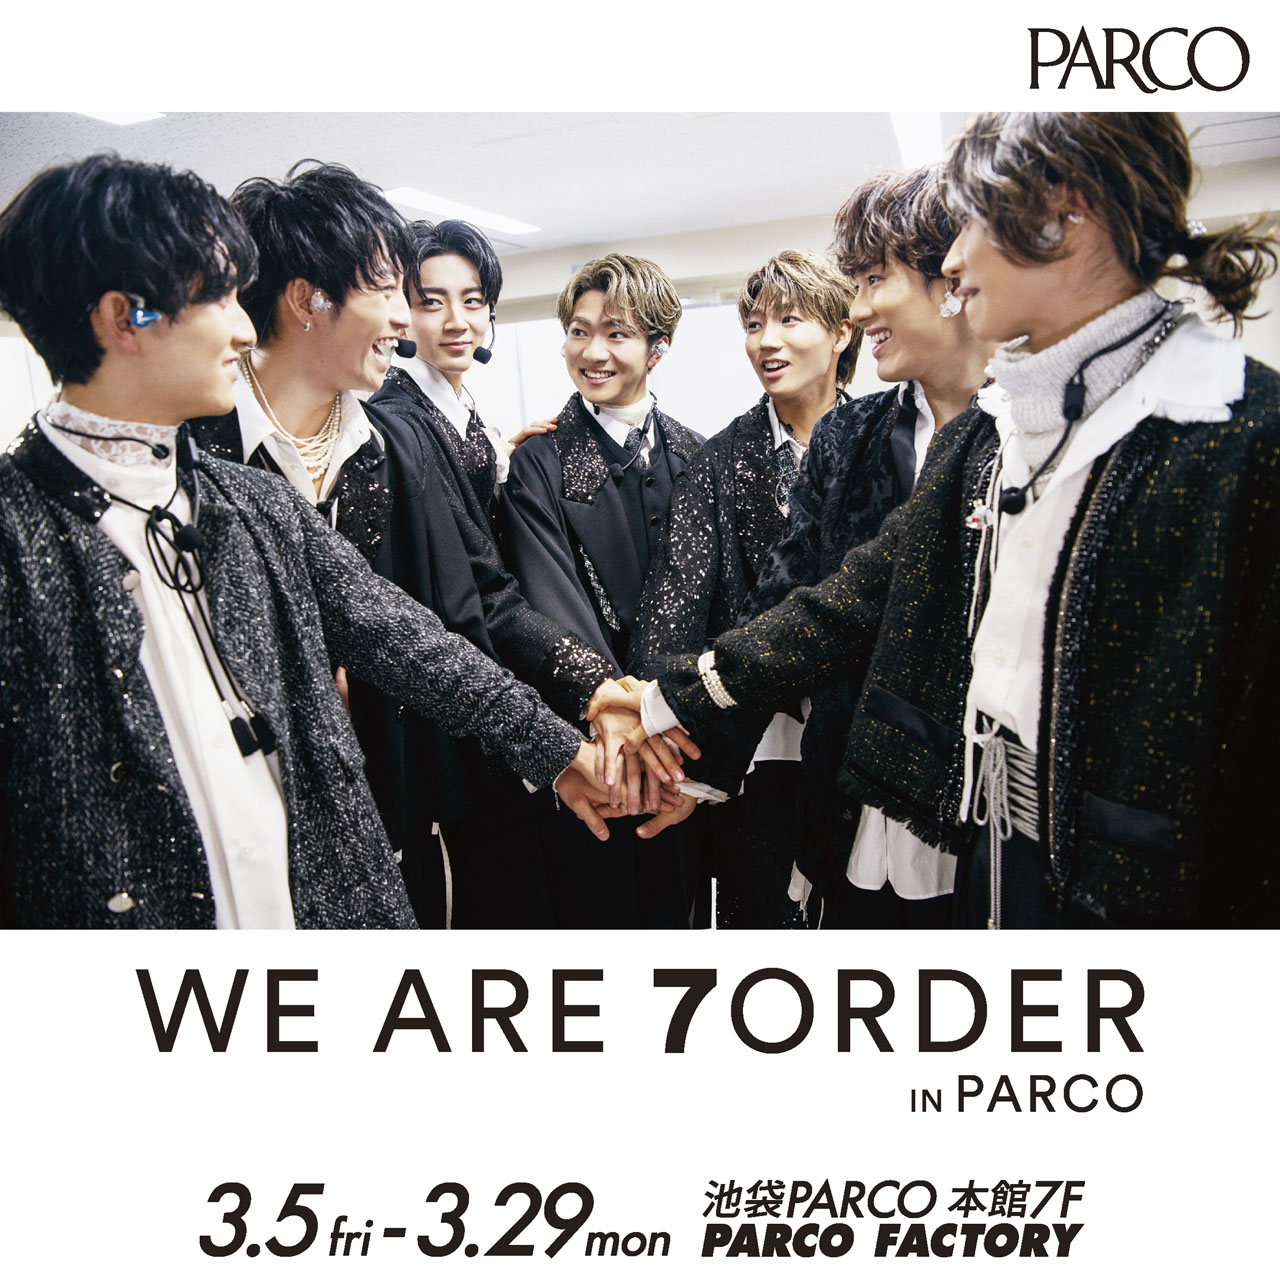 7ORDER 日本武道館LIVE追体験出来る写真展「WE ARE 7ORDER IN PARCO」が3月開催へ！LIVE中にメンバーが実際に着用していた衣装の展示なども3